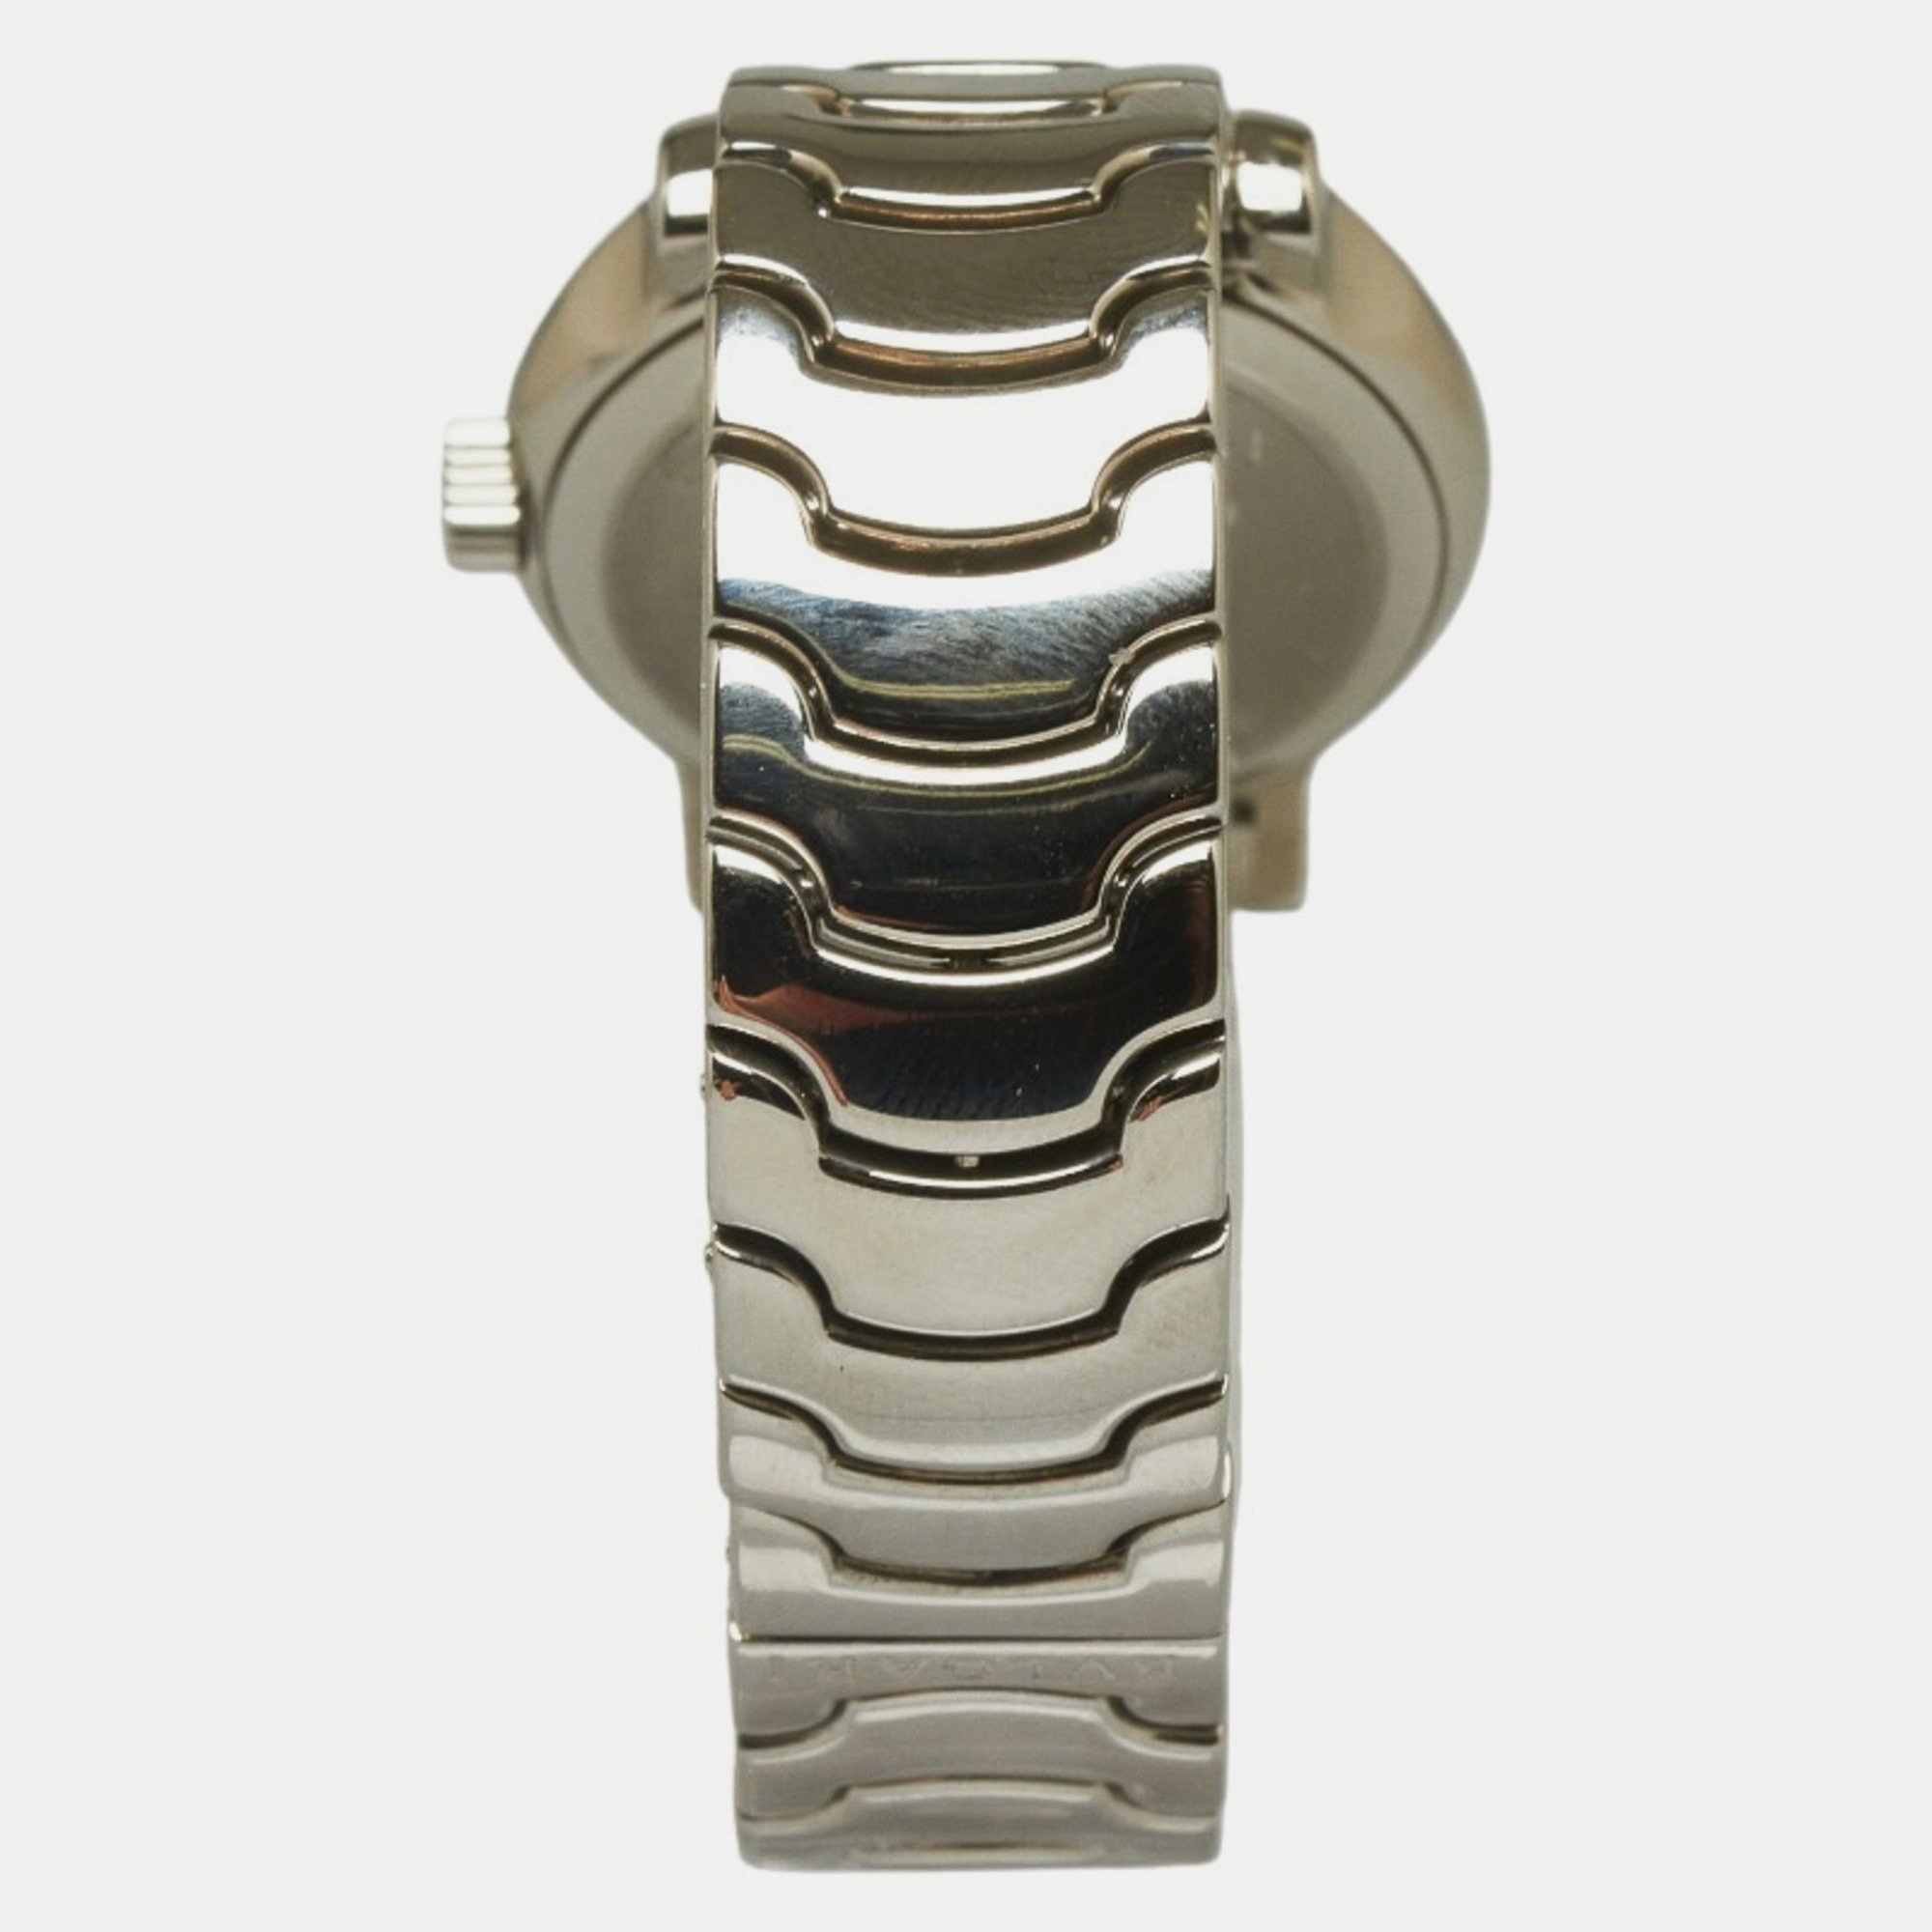 Bvlgari White Stainless Steel Solotempo ST29S/ST29WSSD Quartz Women's Wristwatch 29 Mm